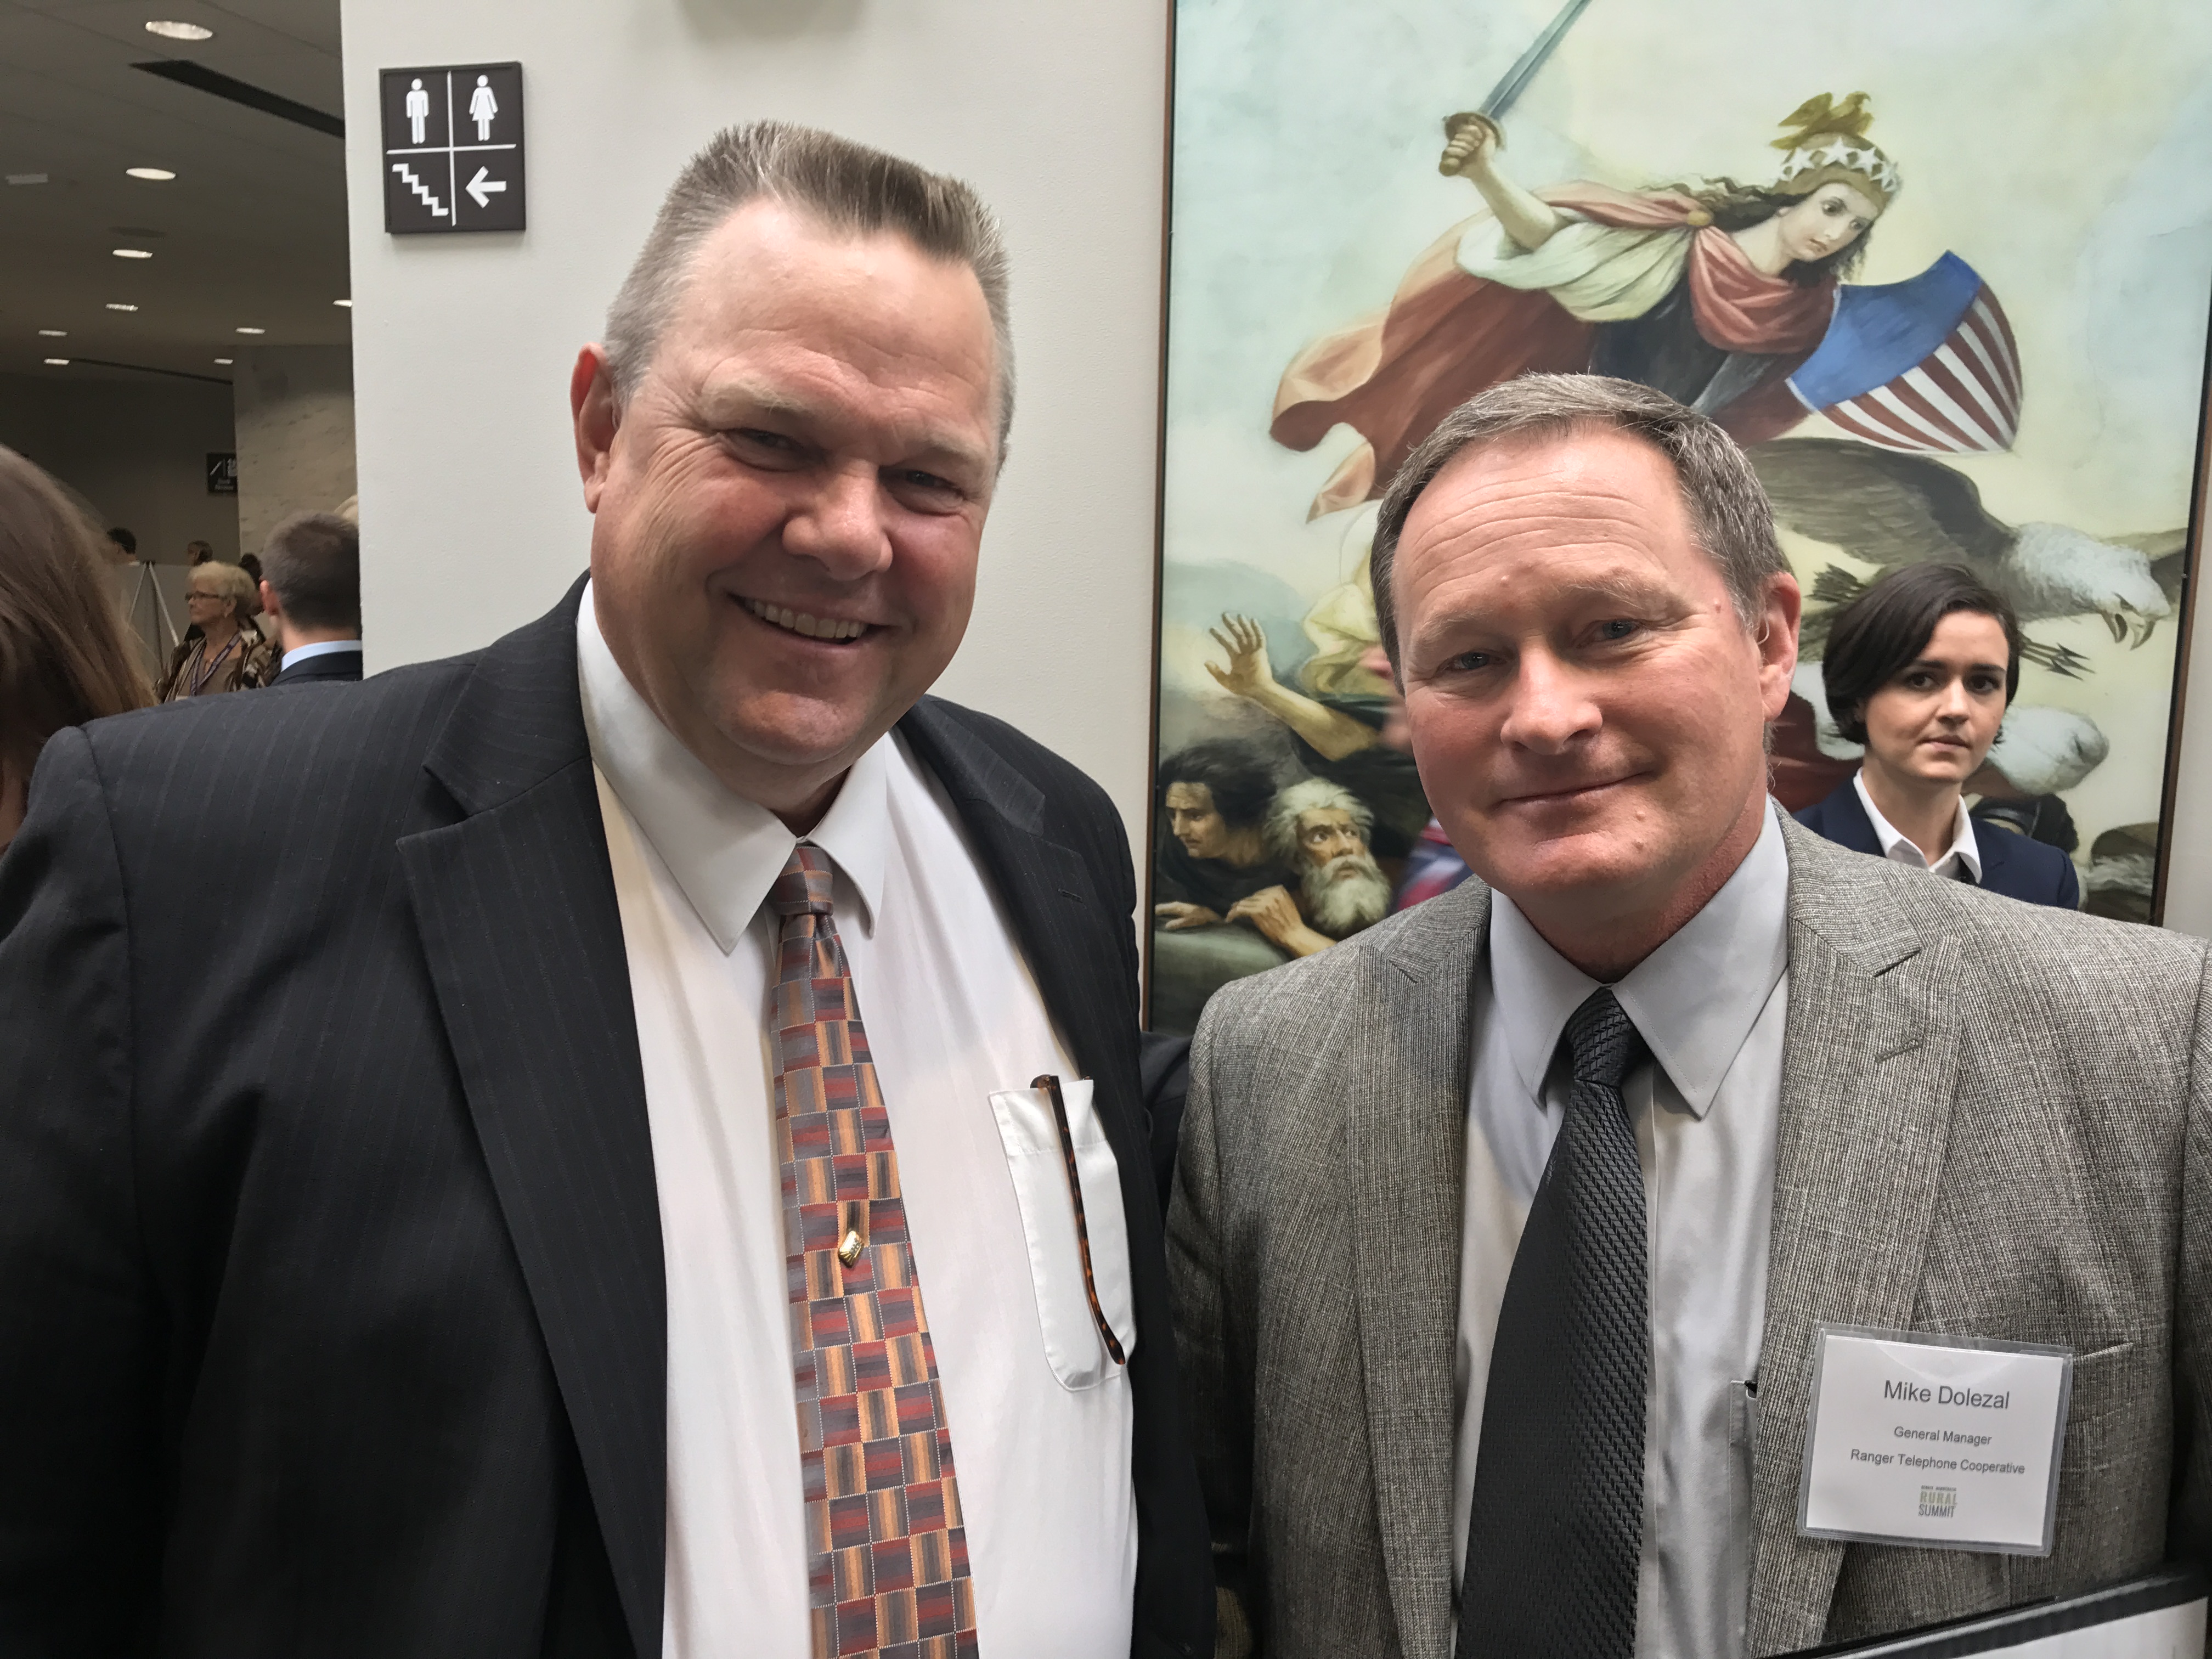 Senator Tester with NTCA member Mike Dolezal